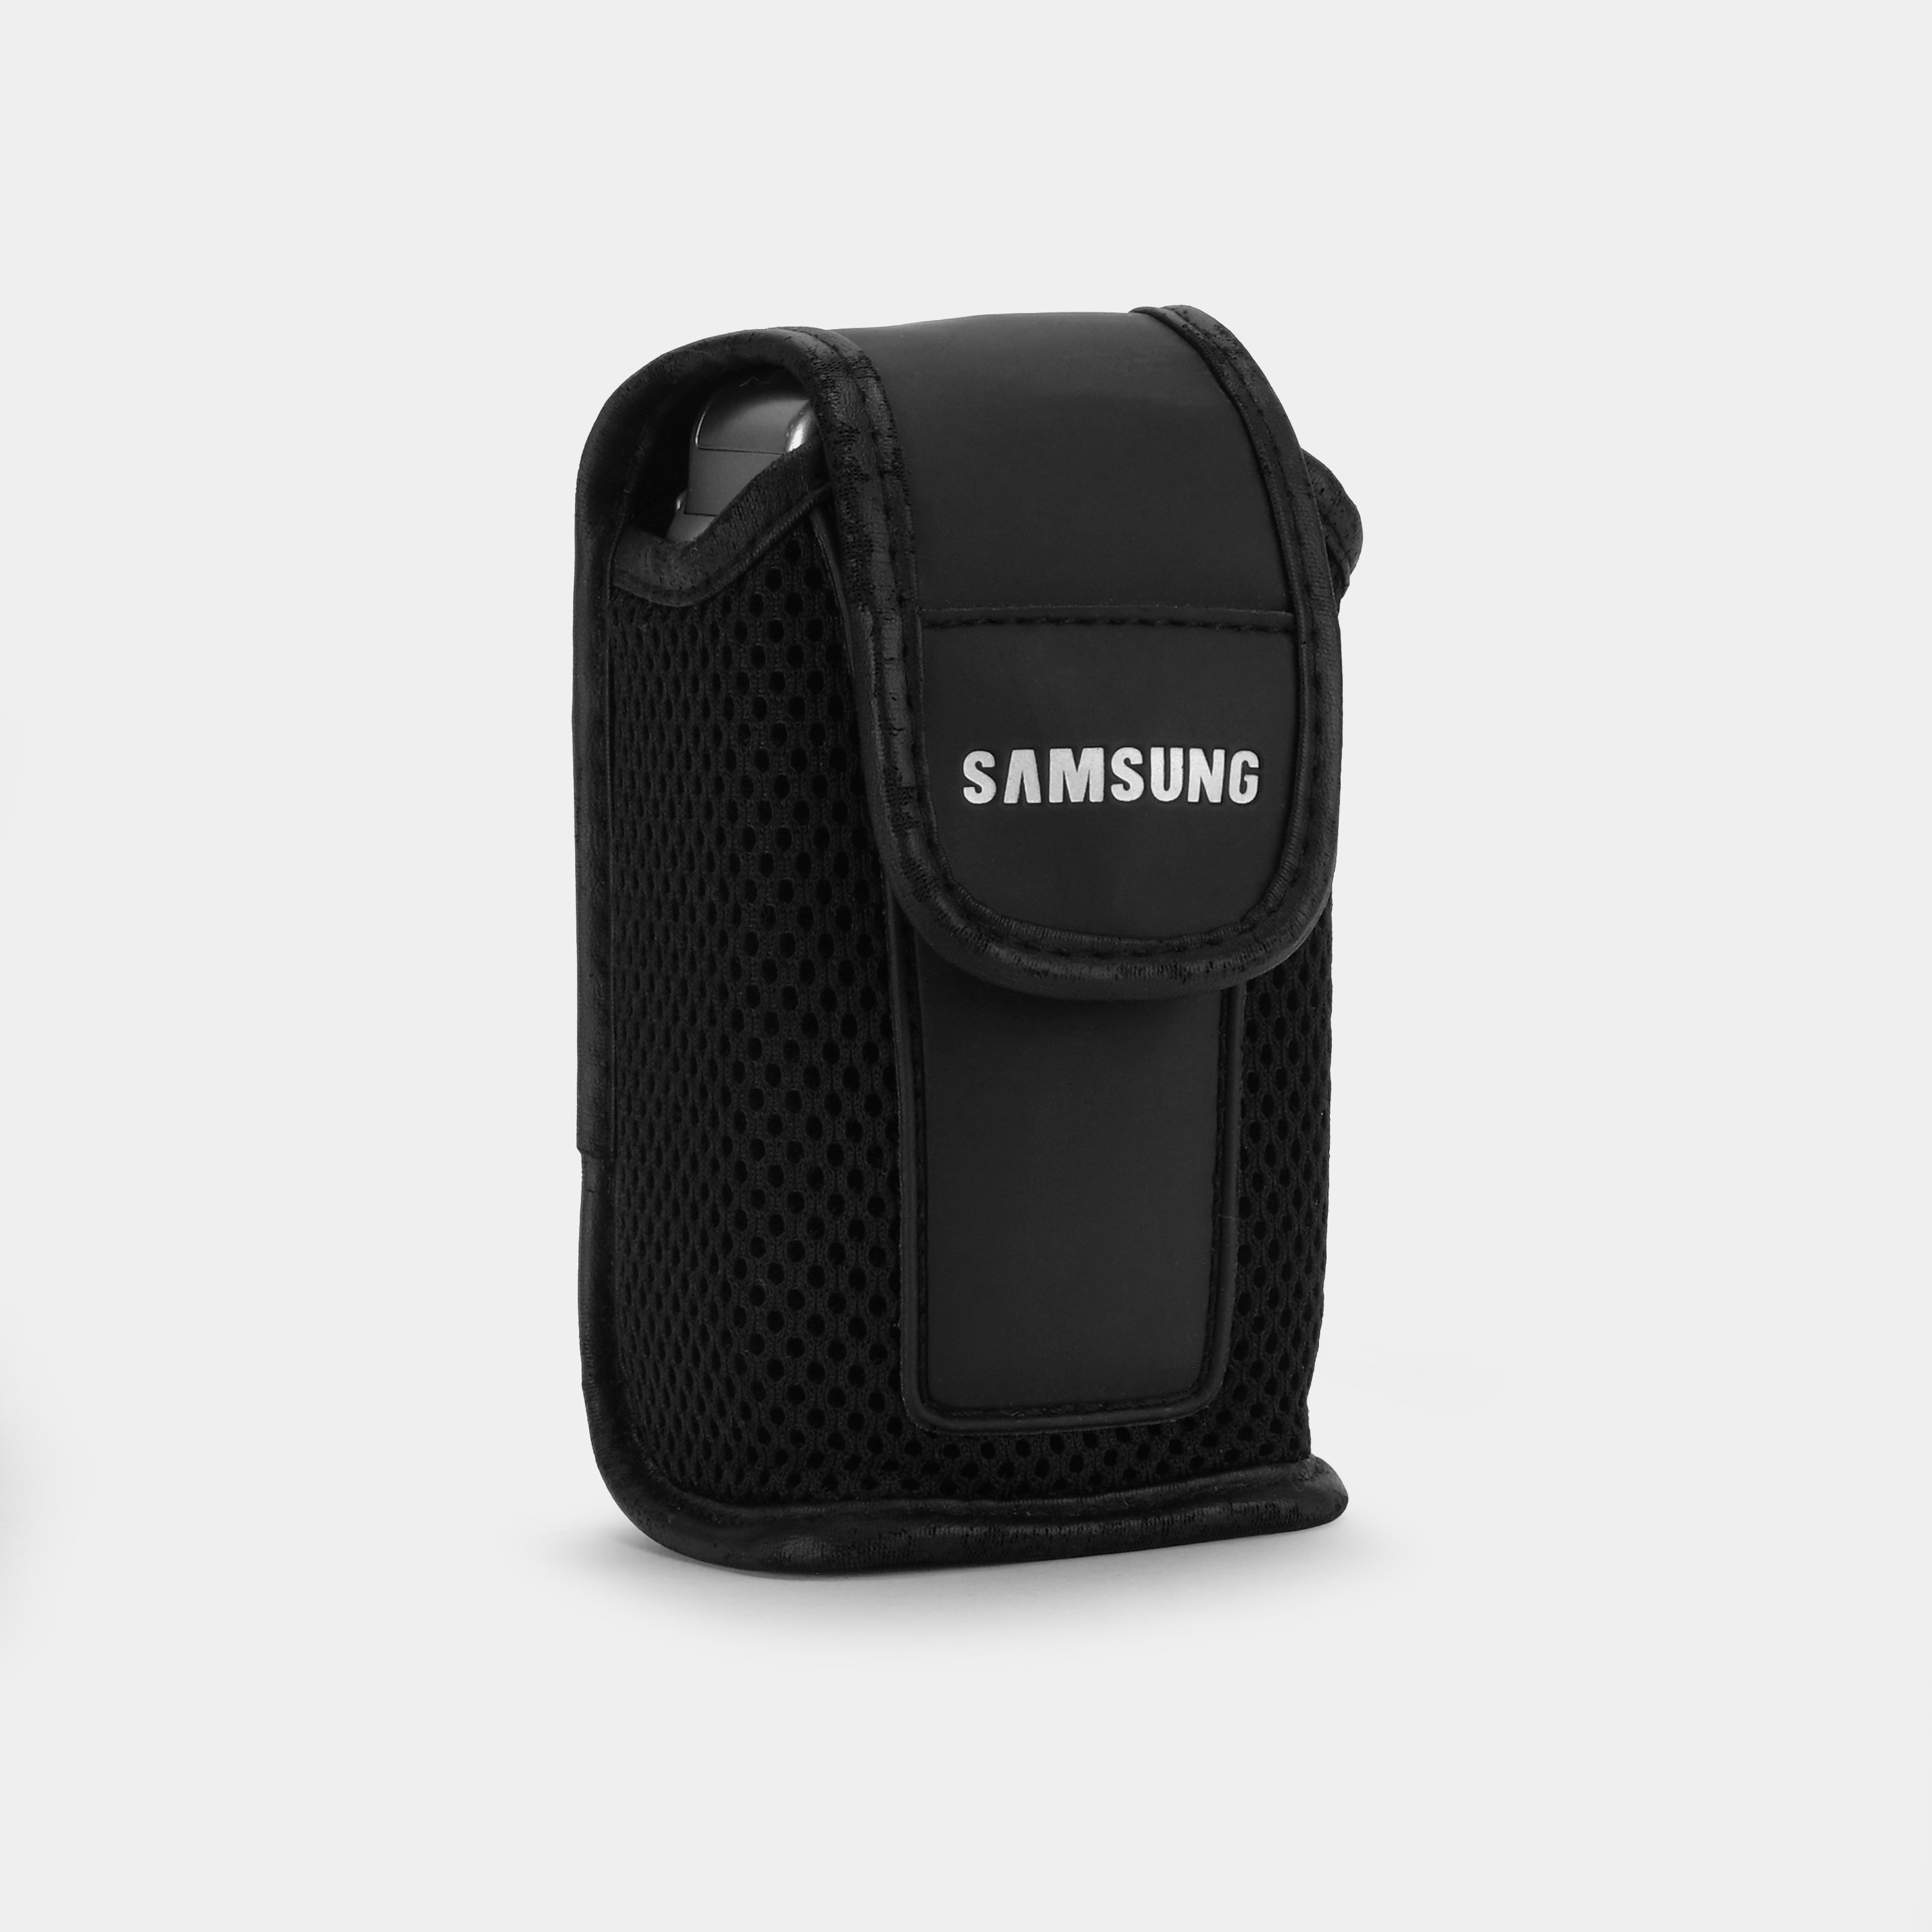 Samsung Digimax A7 Point and Shoot Digital Camera